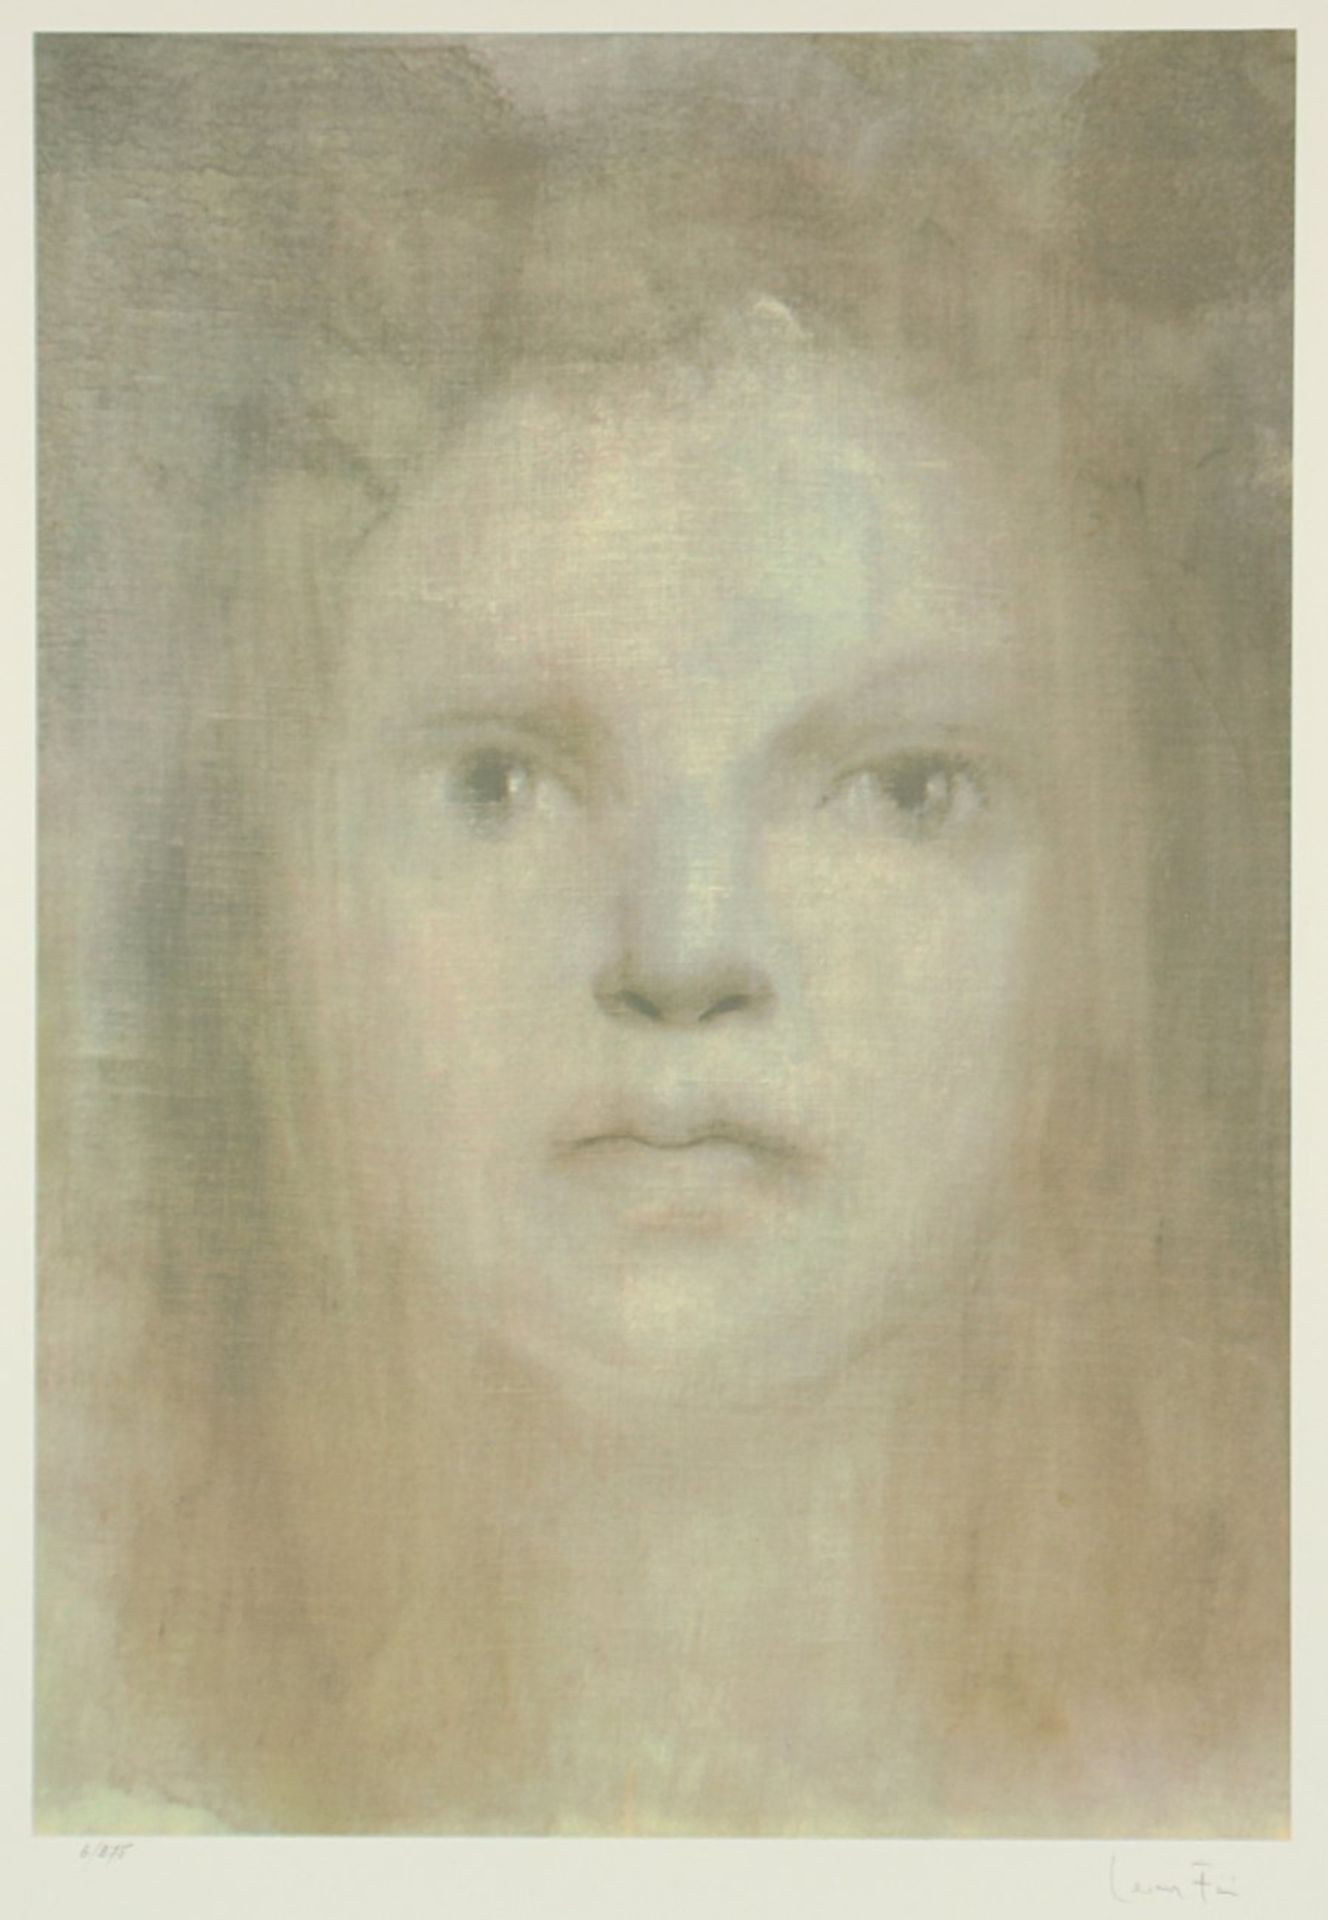 FINI, Leonor, "Tête de femme", Farbgrafik, 55 x 39, nummeriert 6/275, handsigniert, ungerahmt